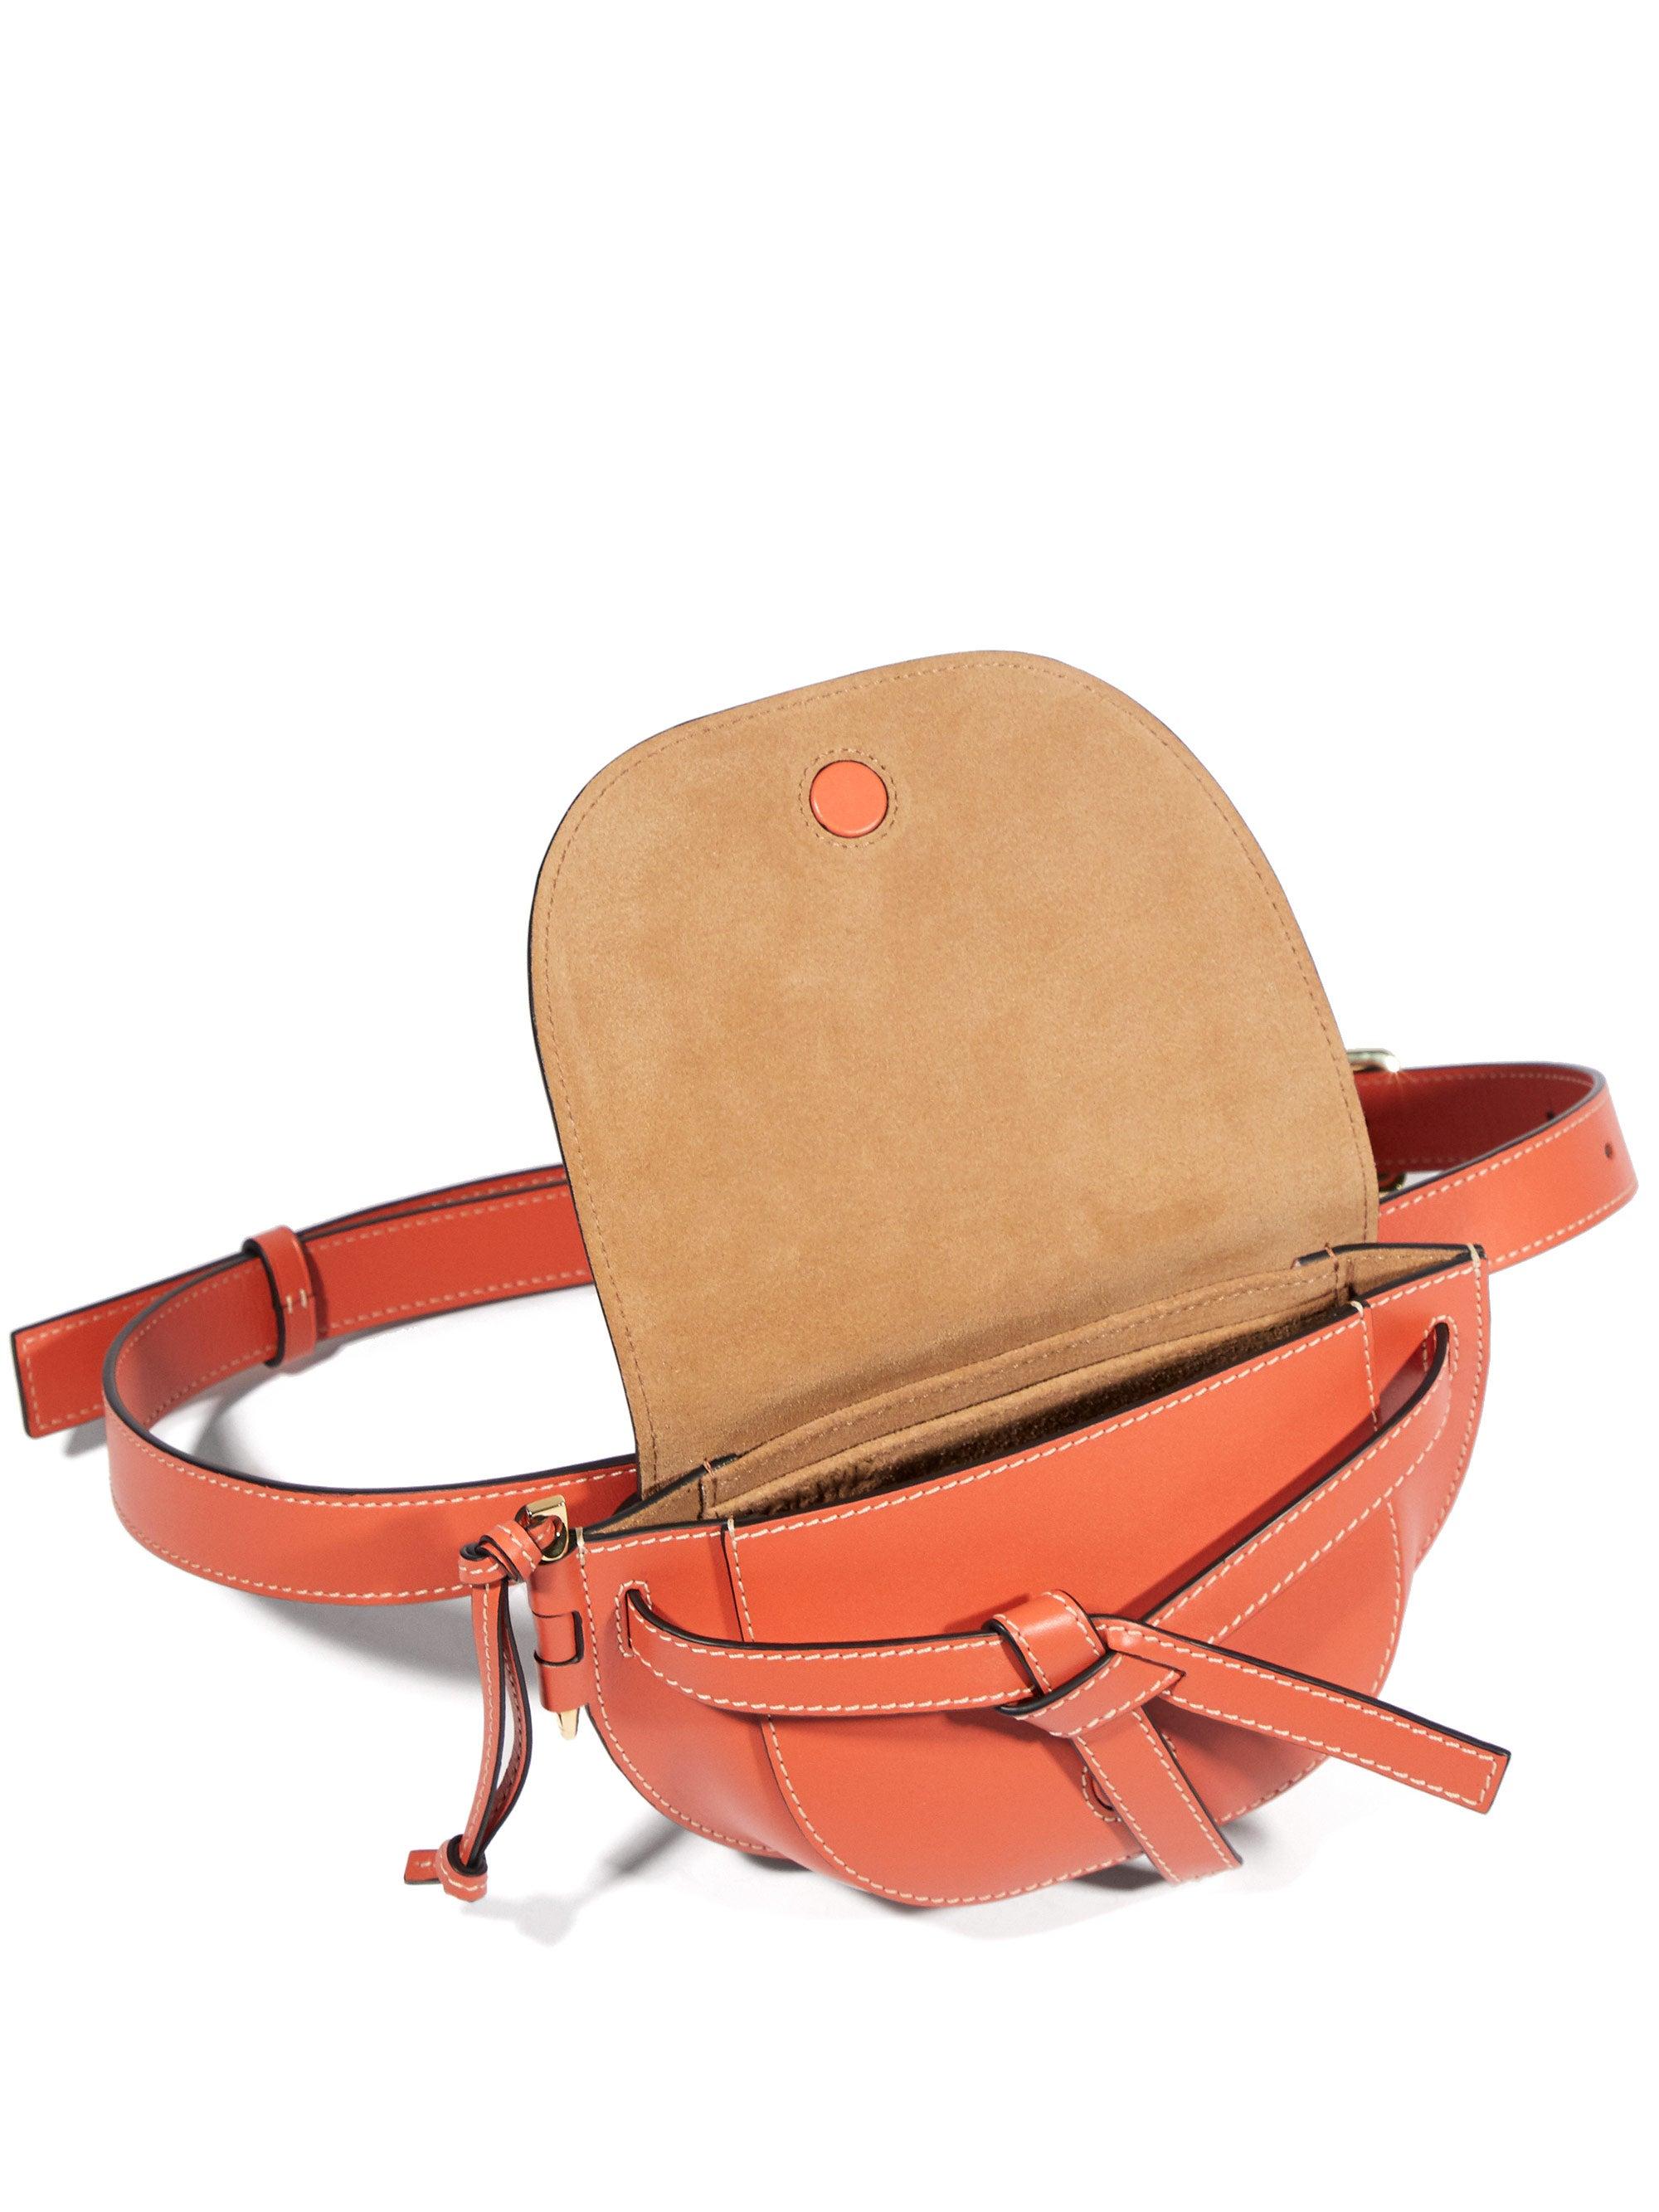 Loewe Gate Mini Leather Belt Bag in Orange - Lyst